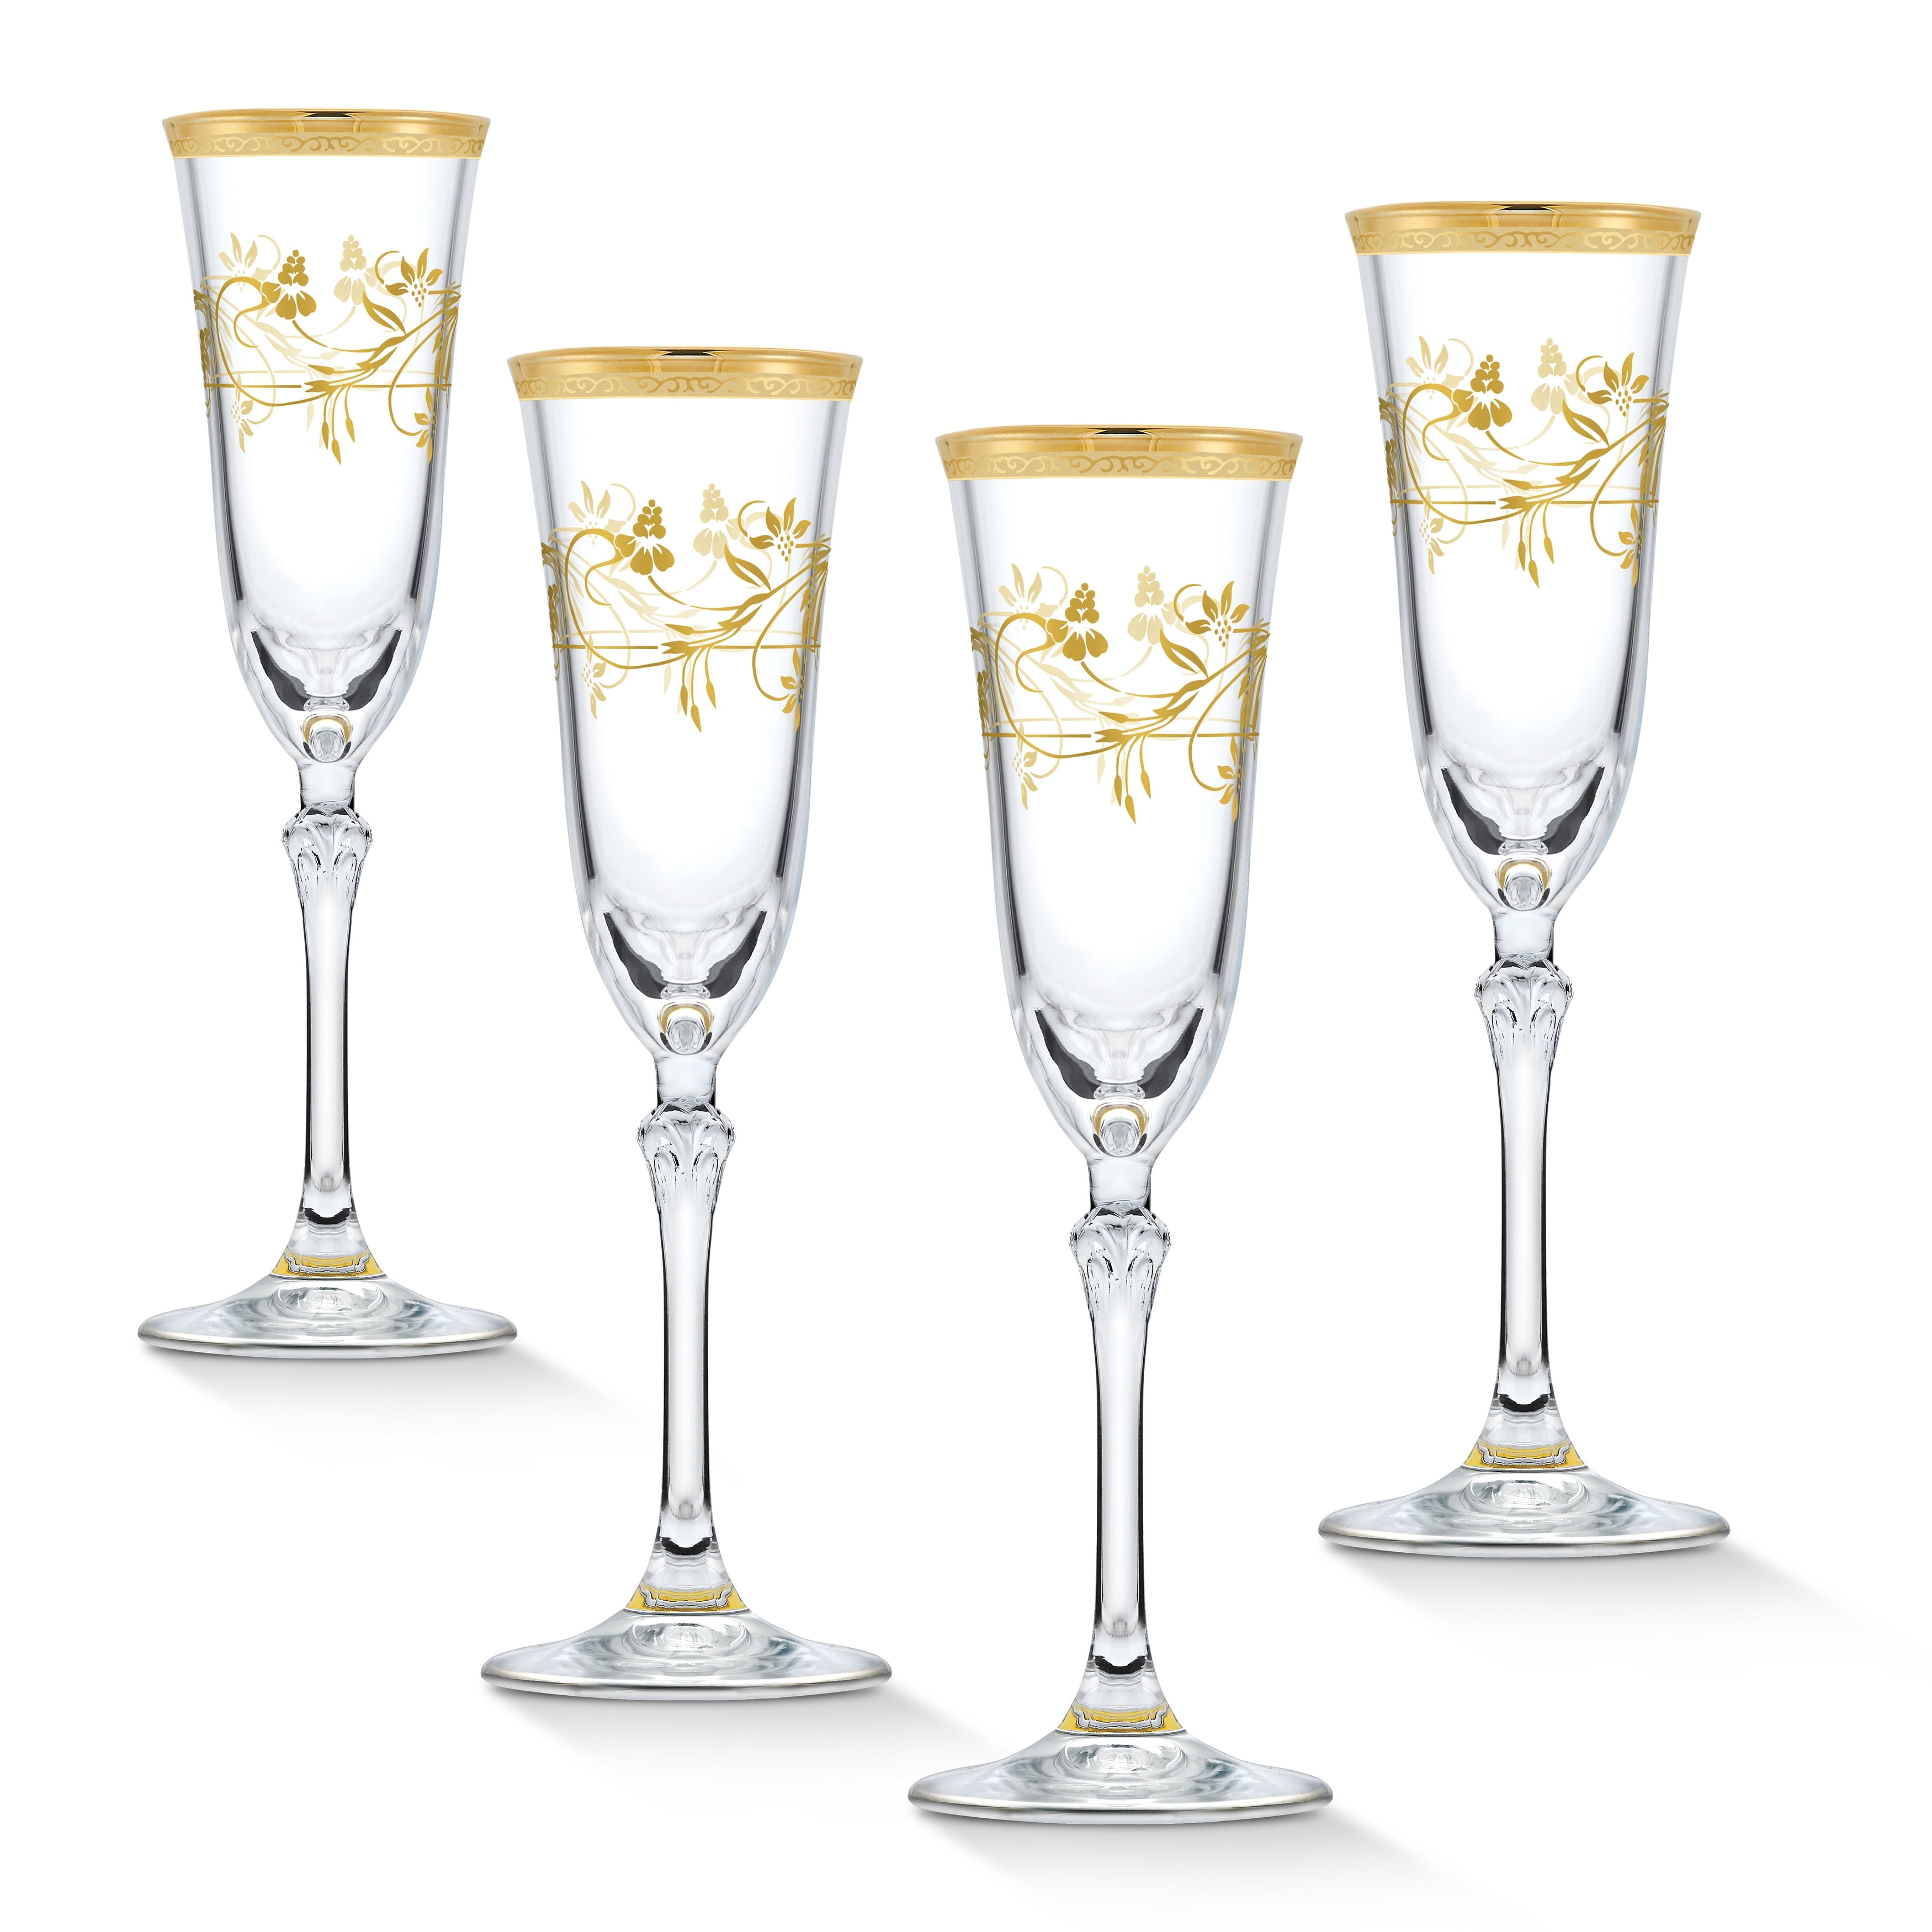 JoyJolt Milo Champagne Glasses 9.4 oz, Set of 8